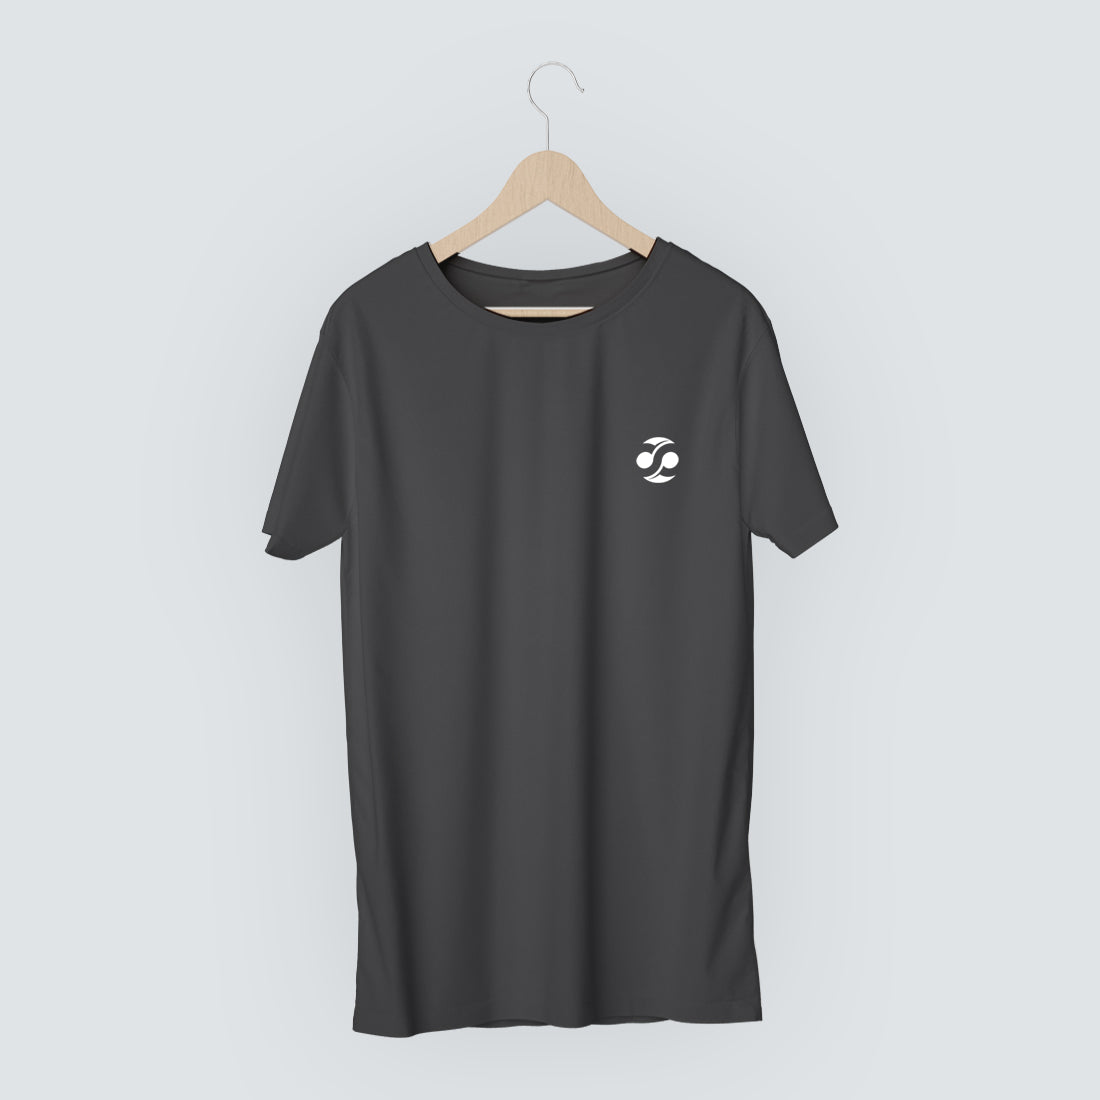 Cre8 Emblem Womens T-Shirt